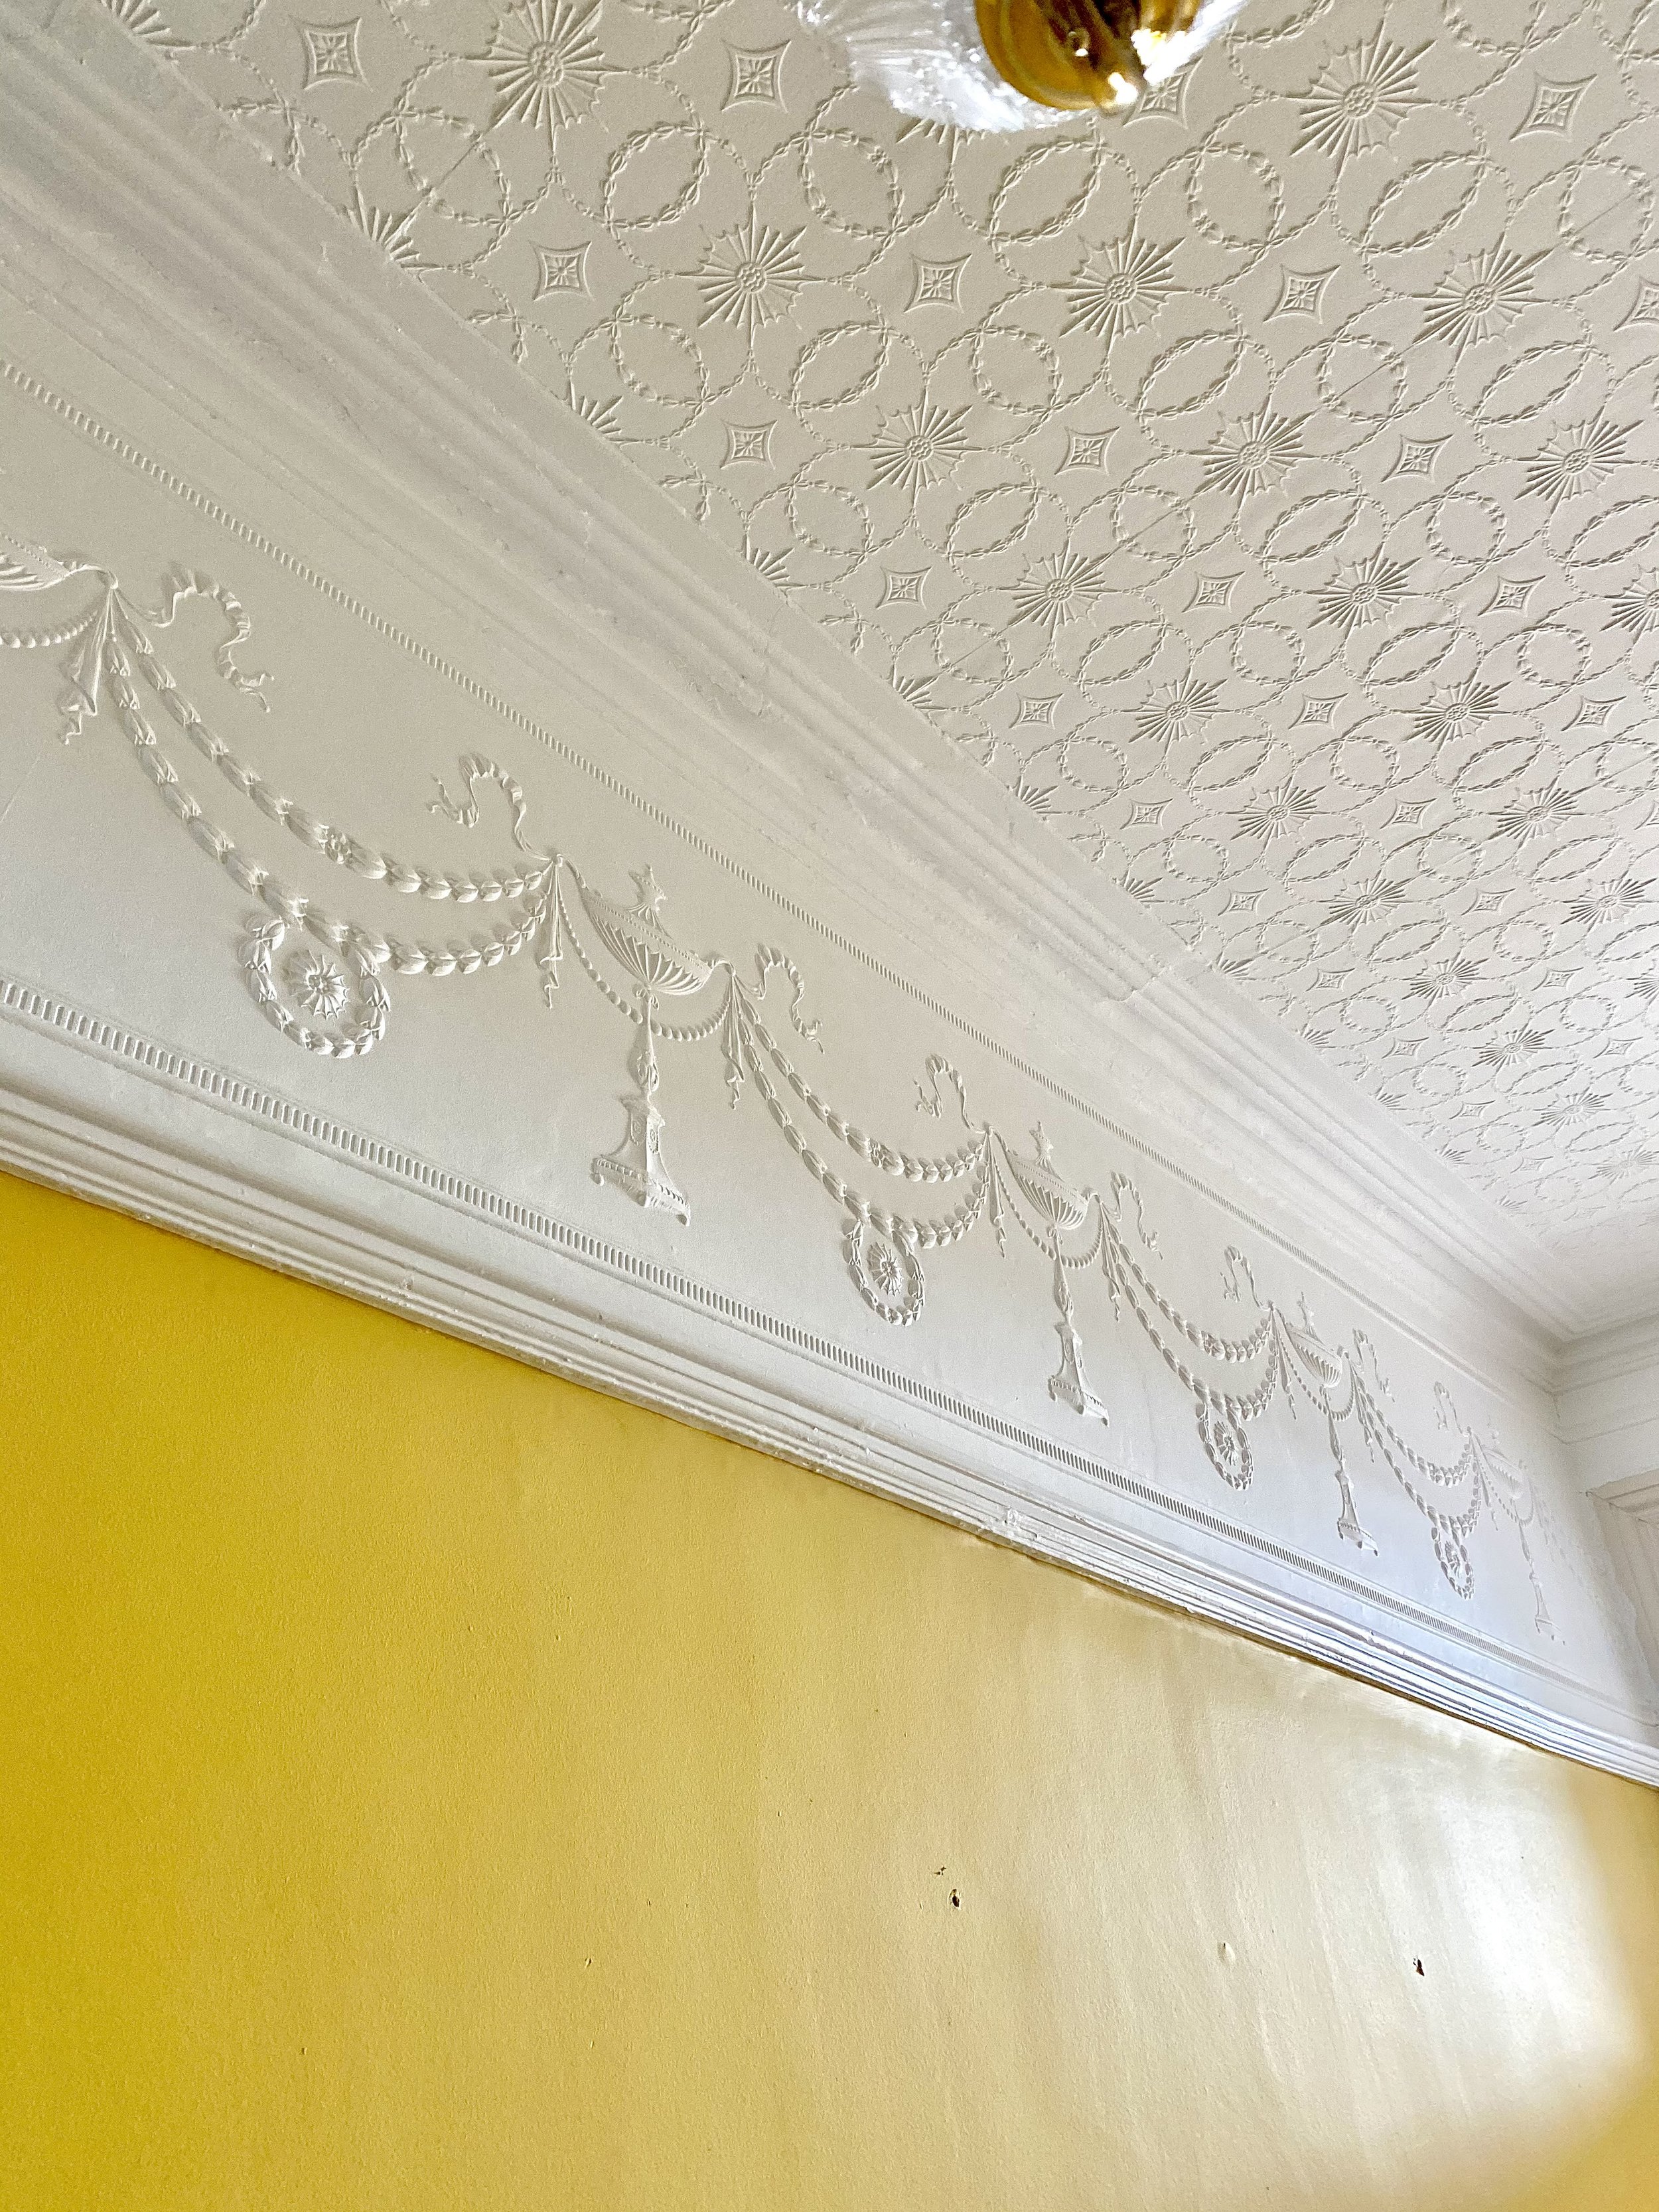 Lincrusta Adam Frieze, Lincrusta Amelia Ceiling, By Frank Holmes Fine Decor, Heritage Skills, Victorian Property Renovation and Relief Decor Repairs (Copy)